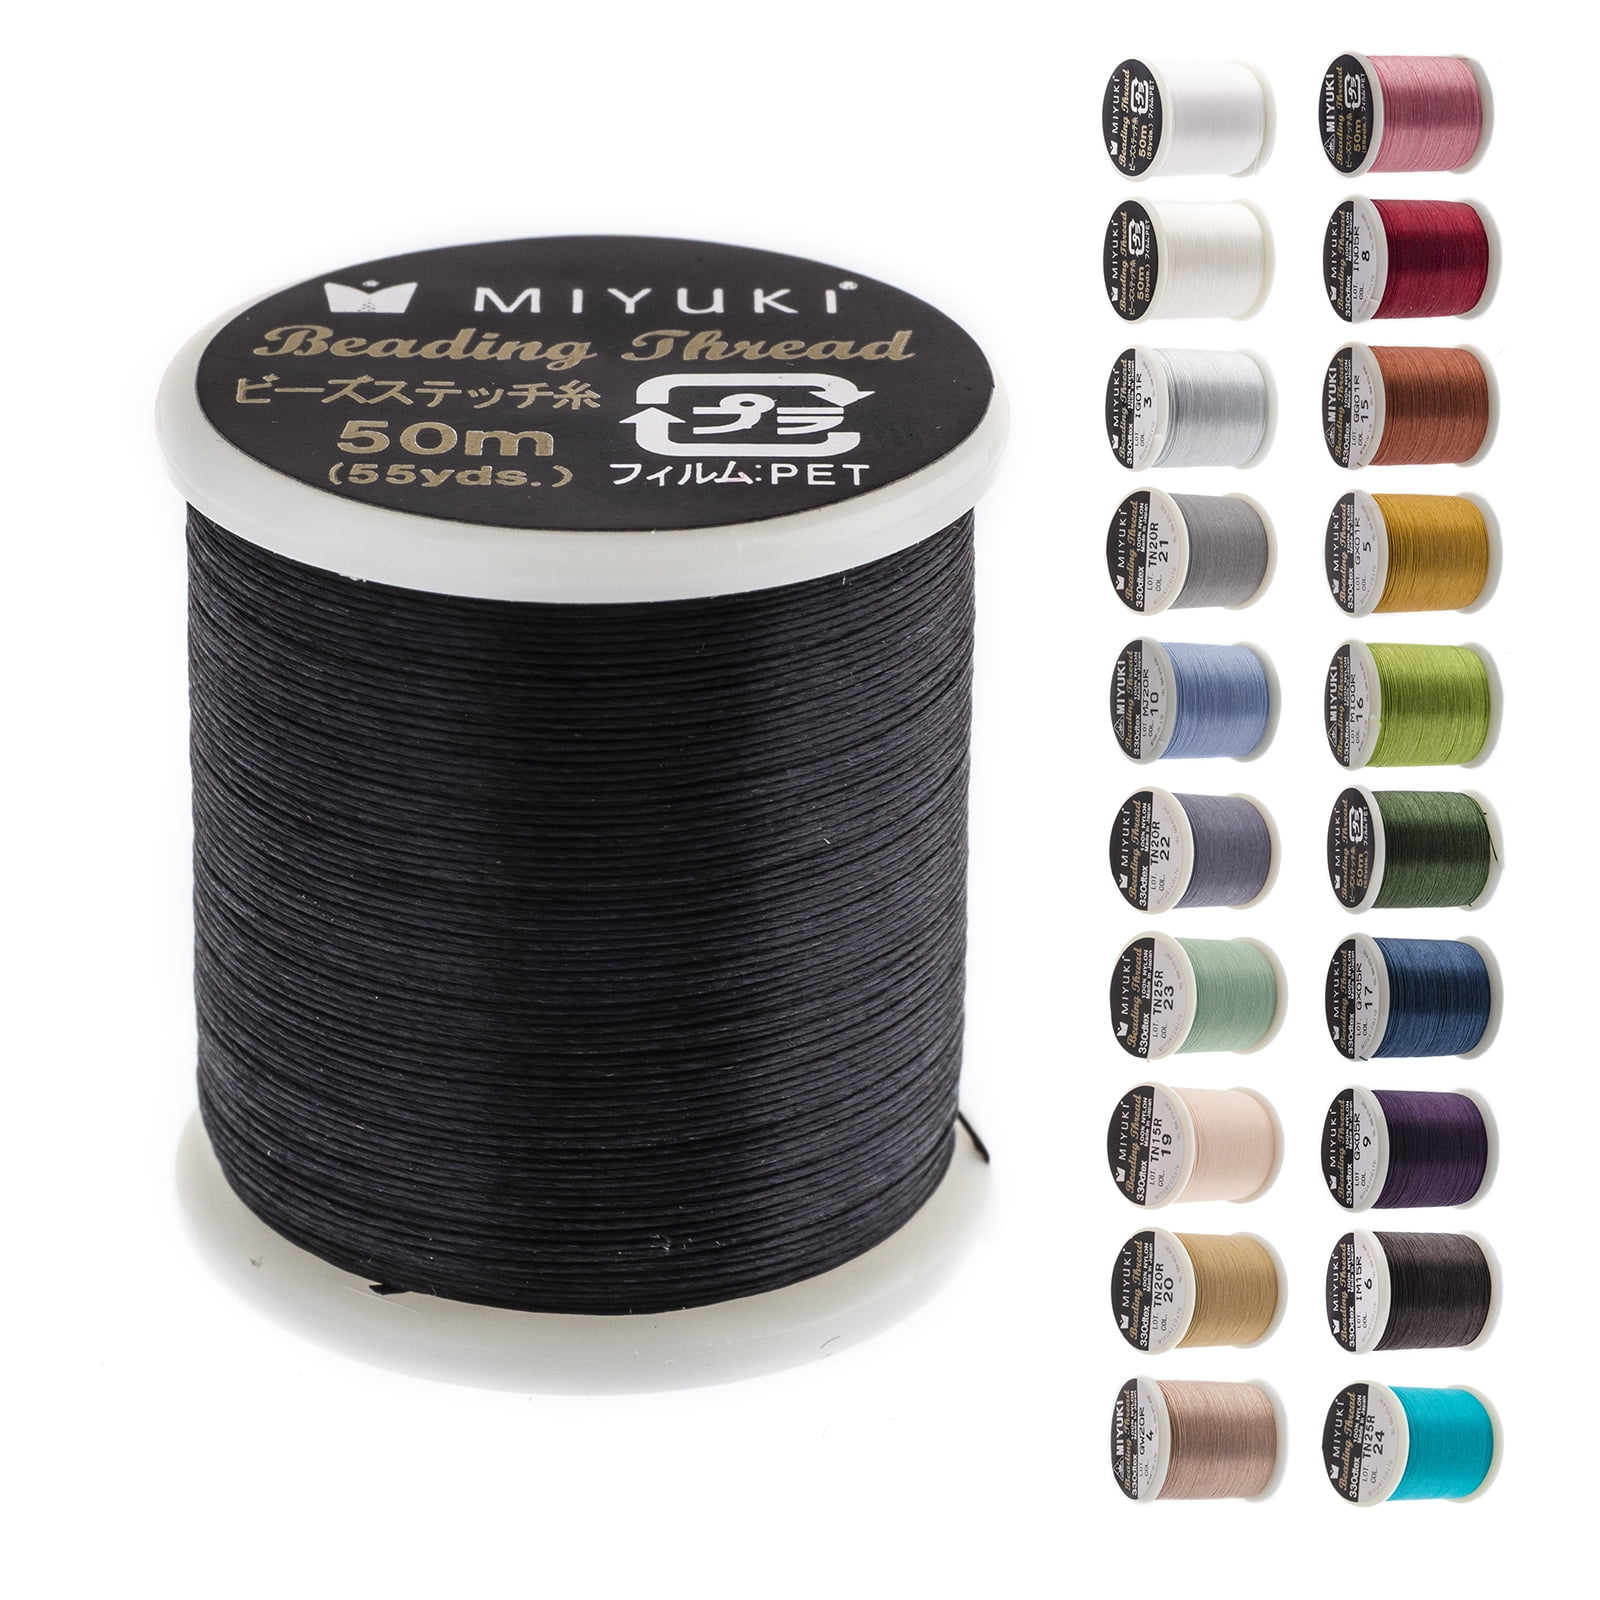 Miyuki Japanese Beading Thread, 50 Meter Spool Nylon Bead Cord for Delica  Bead Stringing & Jewelry Making, 24 Different Bobbin Colors -  Israel